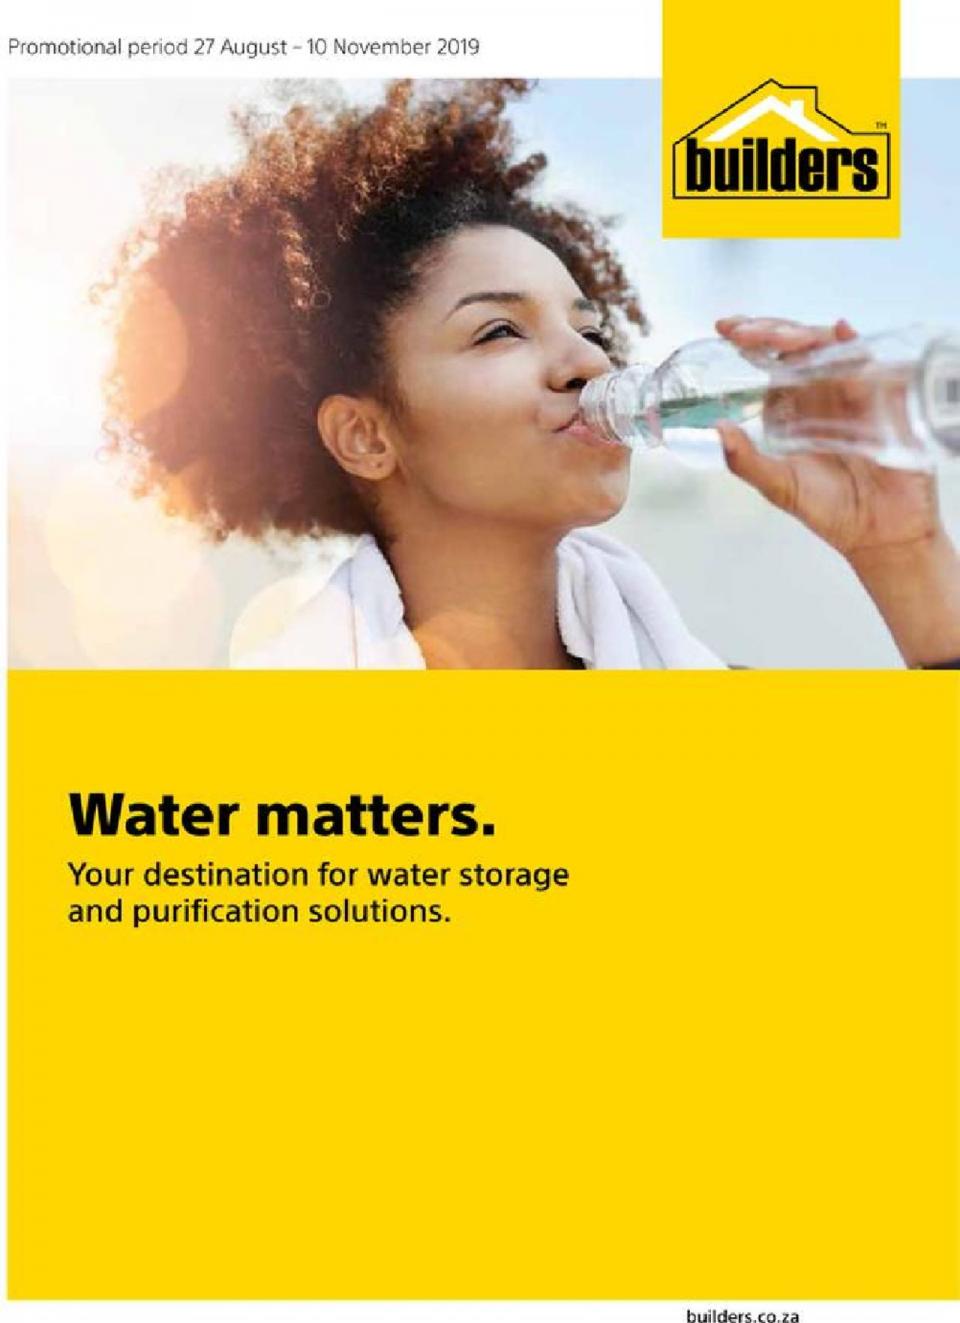 Builders Warehouse Water Matters 27 August 2019